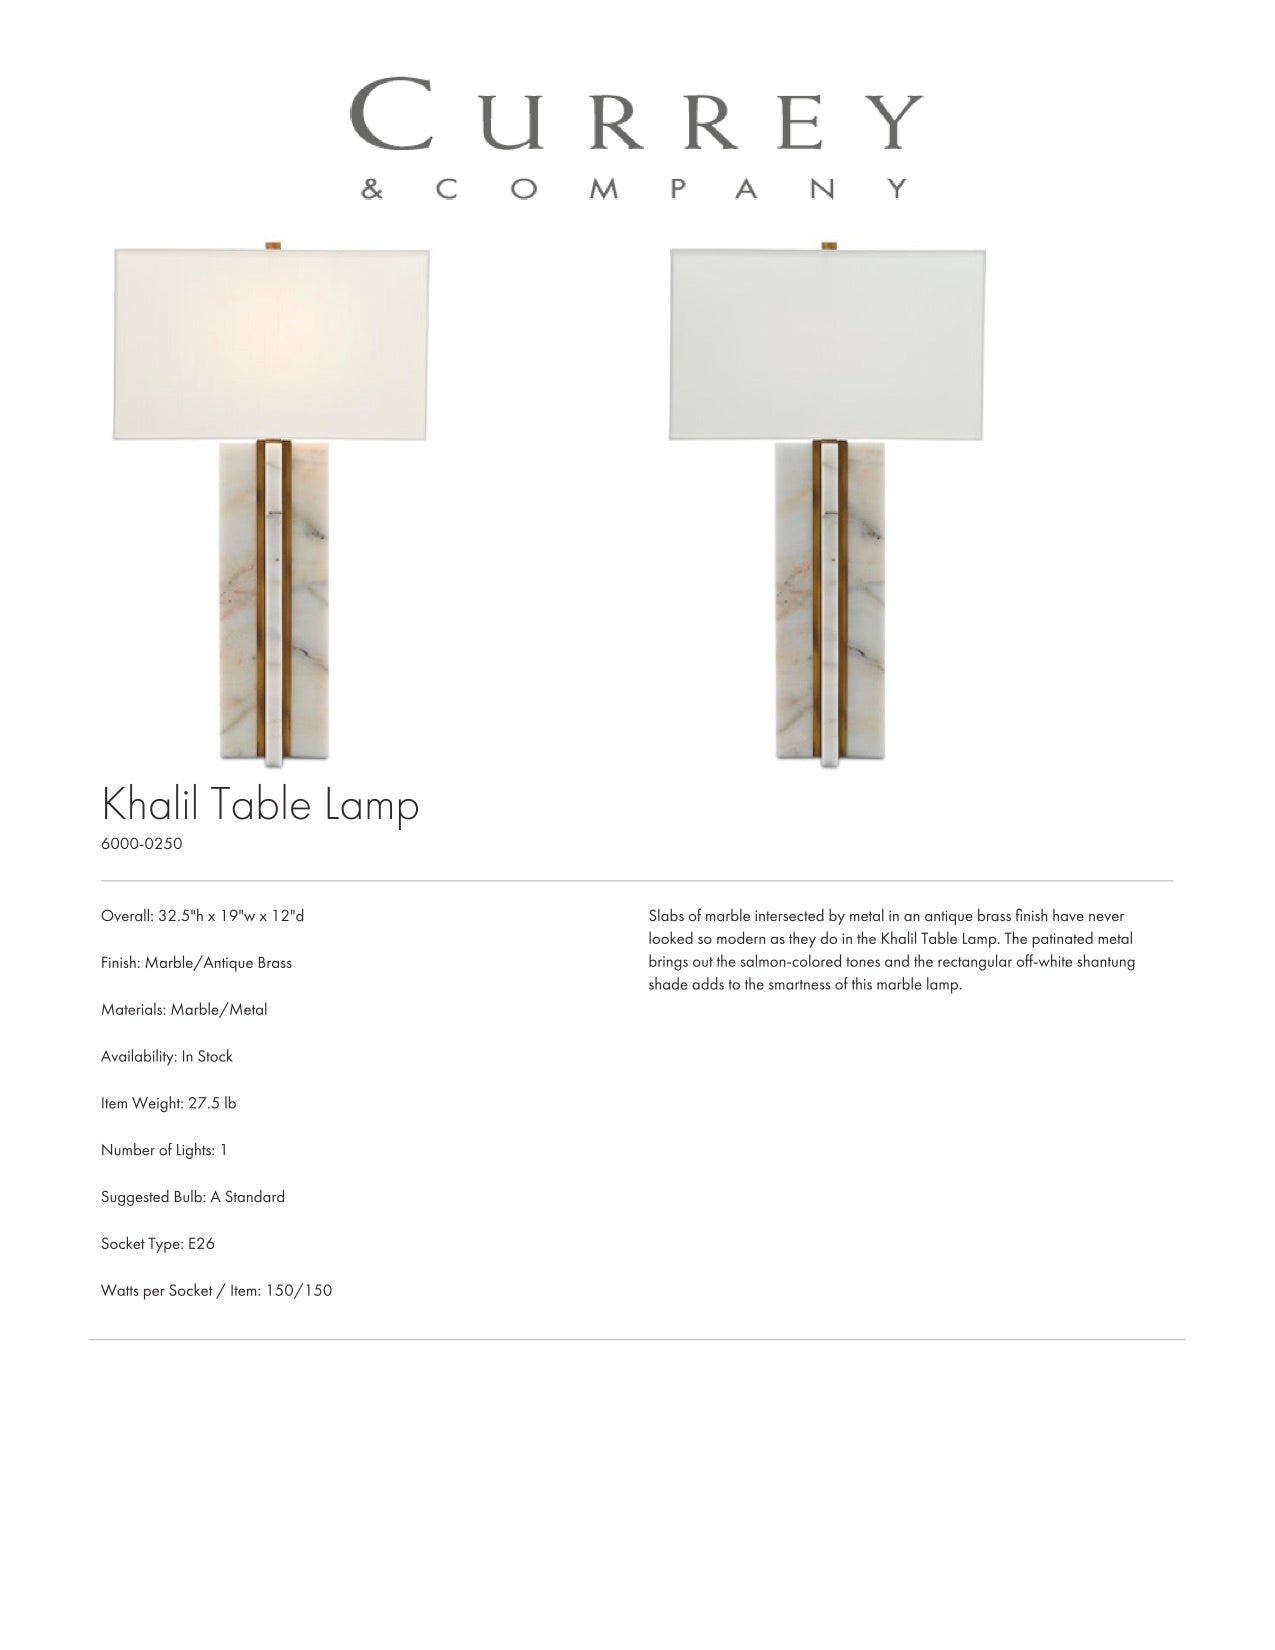 Currey & Company Khalil Table Lamp Tearsheet